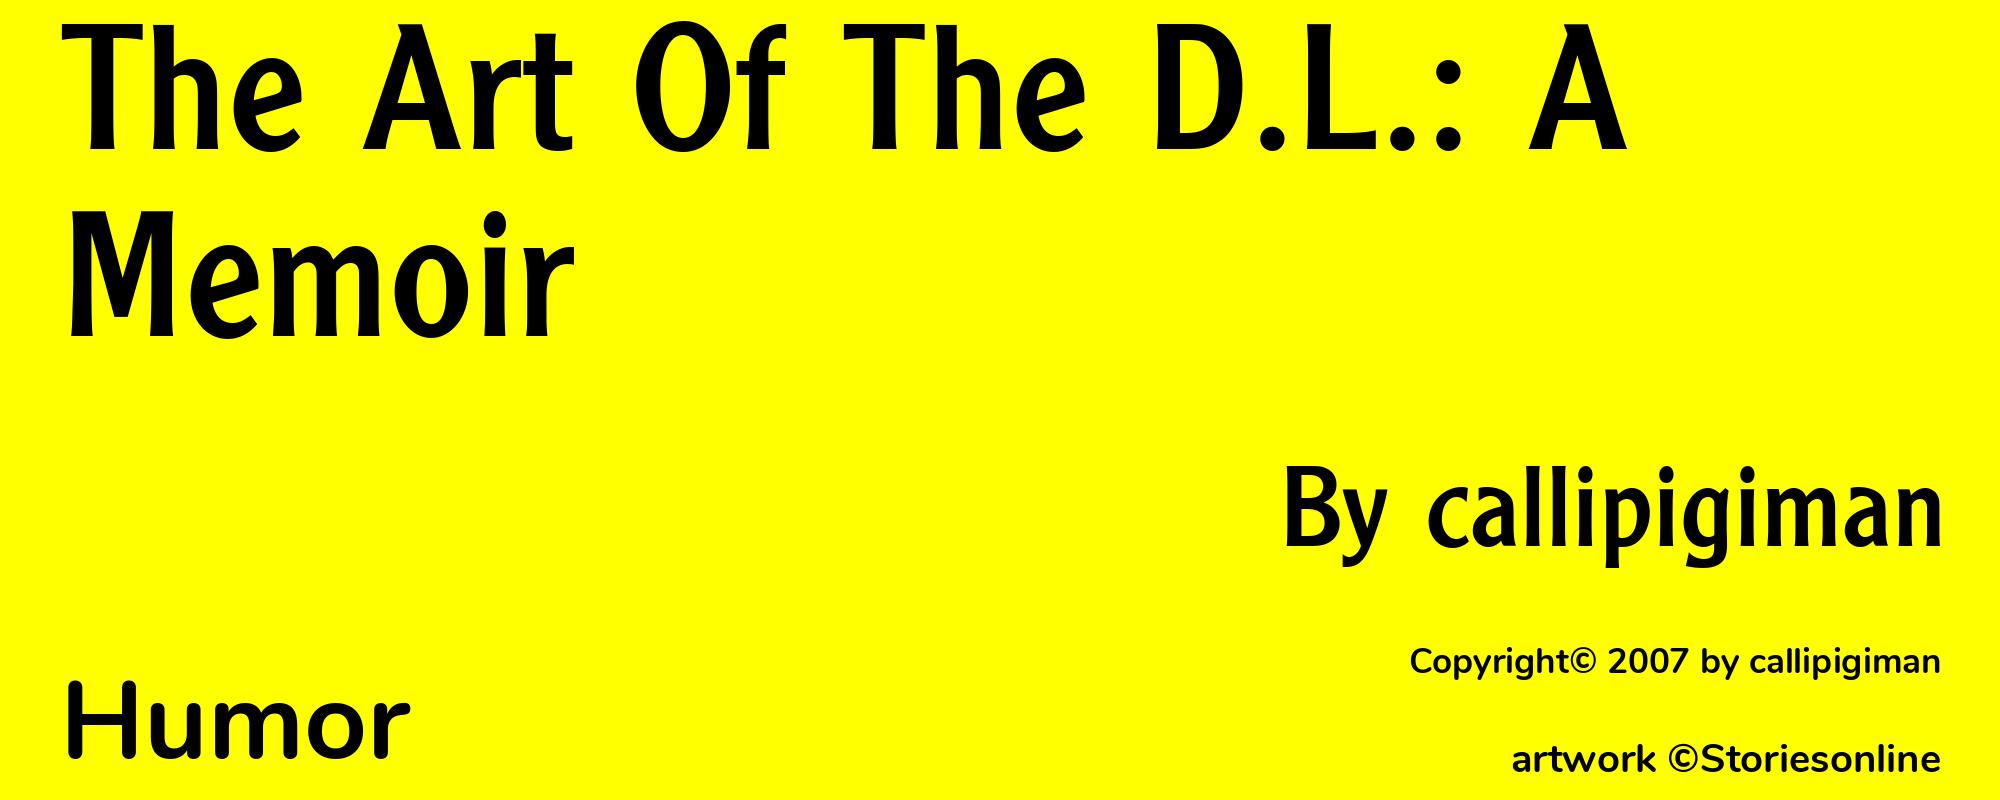 The Art Of The D.L.: A Memoir - Cover